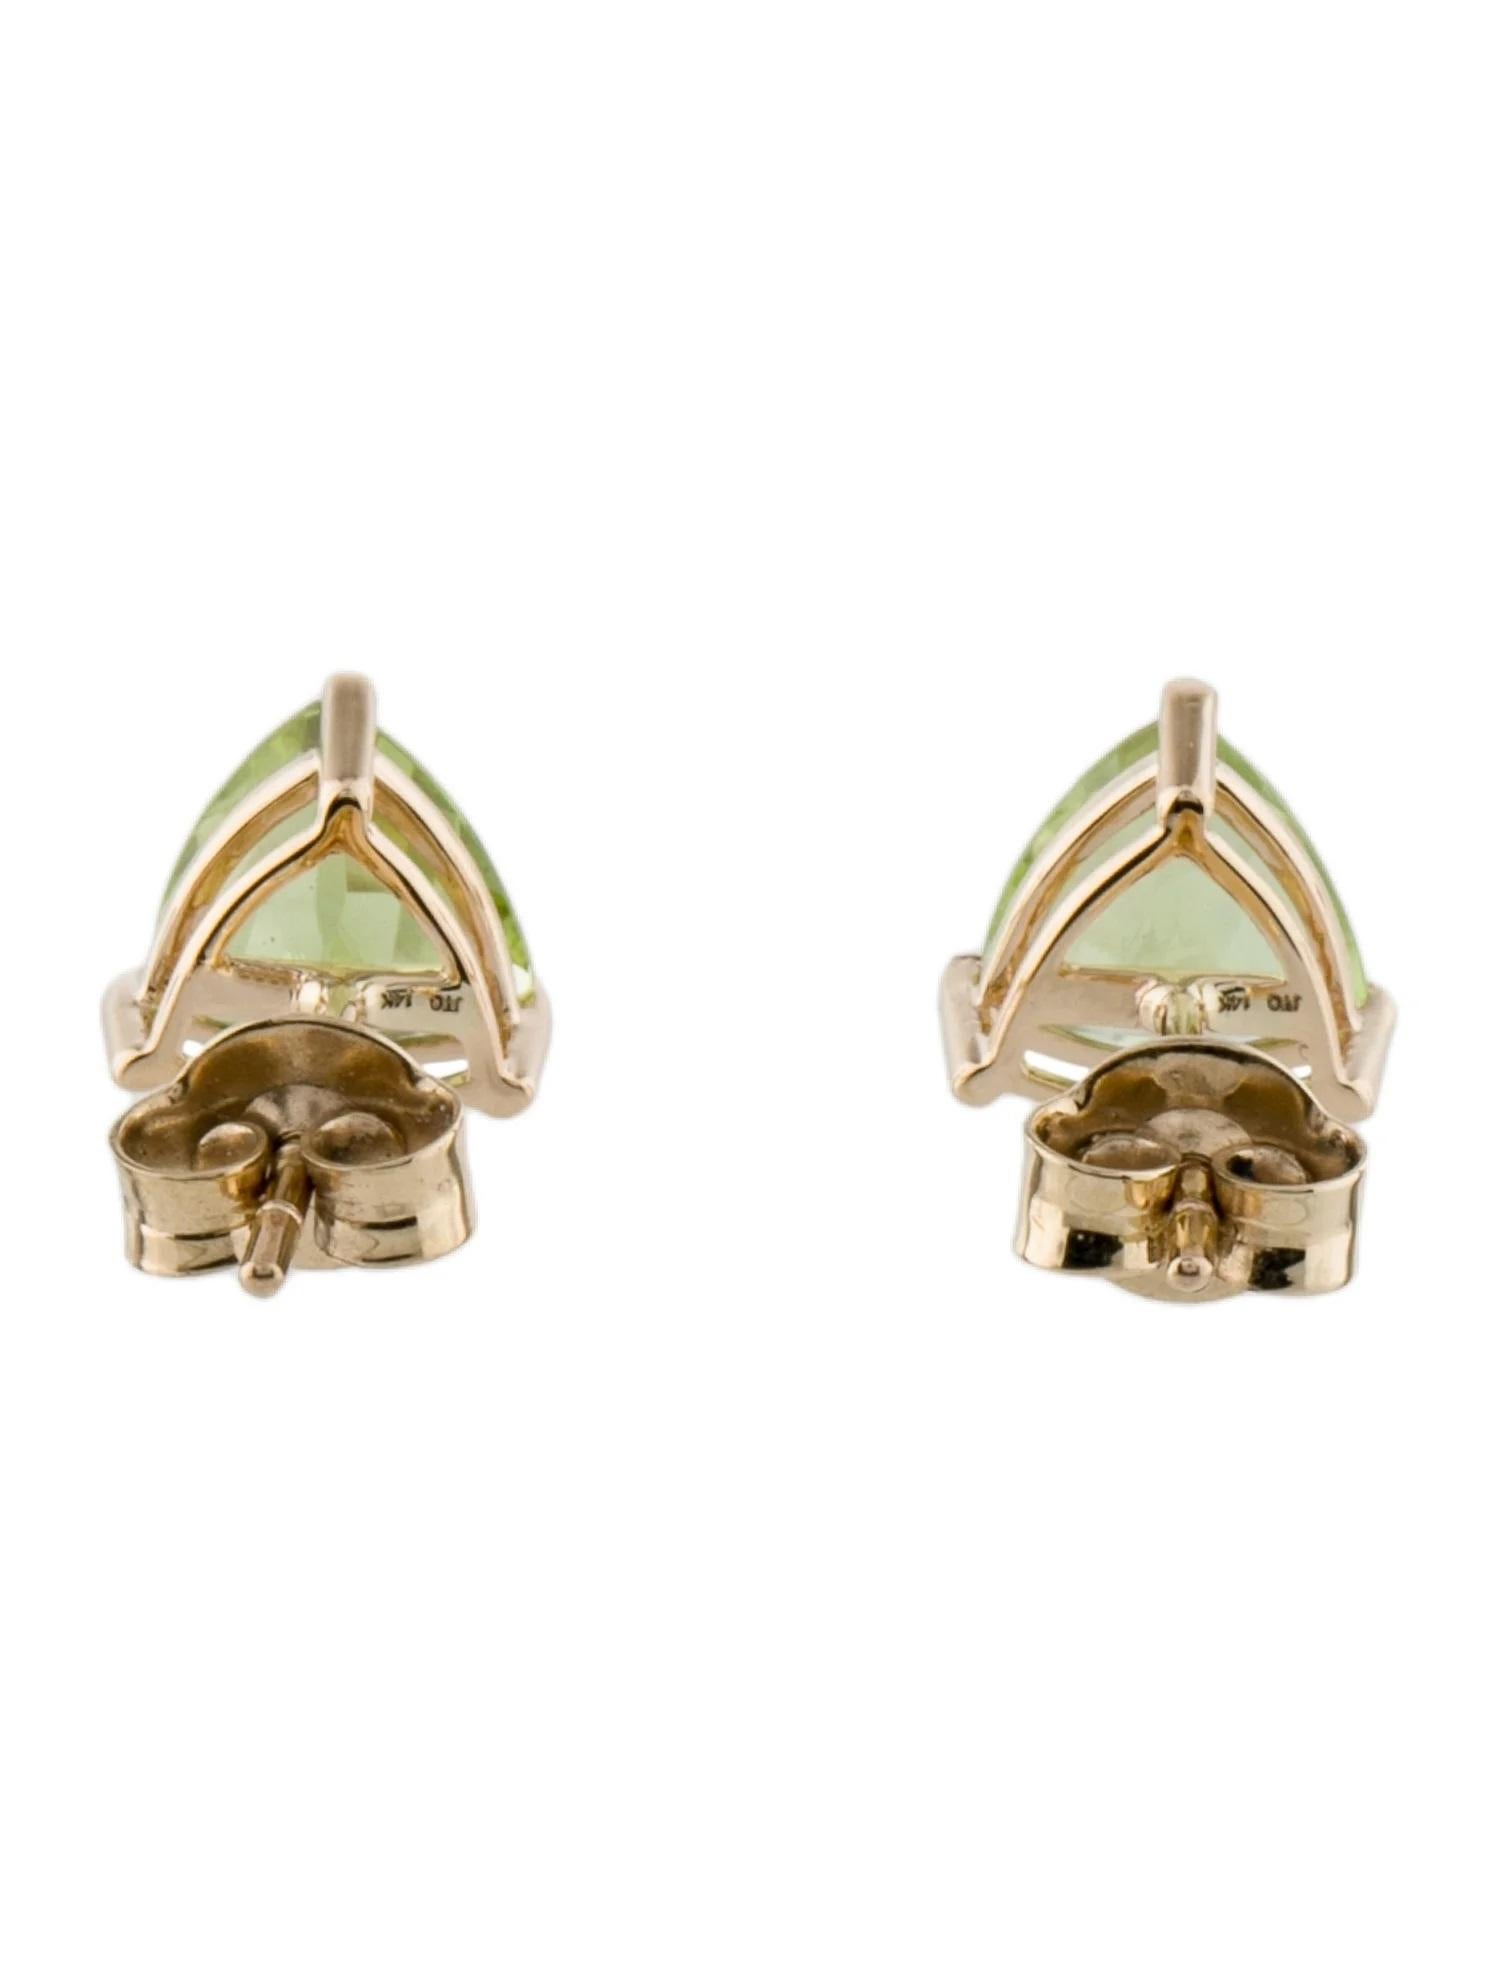 Artist 14K Peridot Stud Earrings - Vibrant Green Gemstones, 2.15 Carats Total Weight For Sale